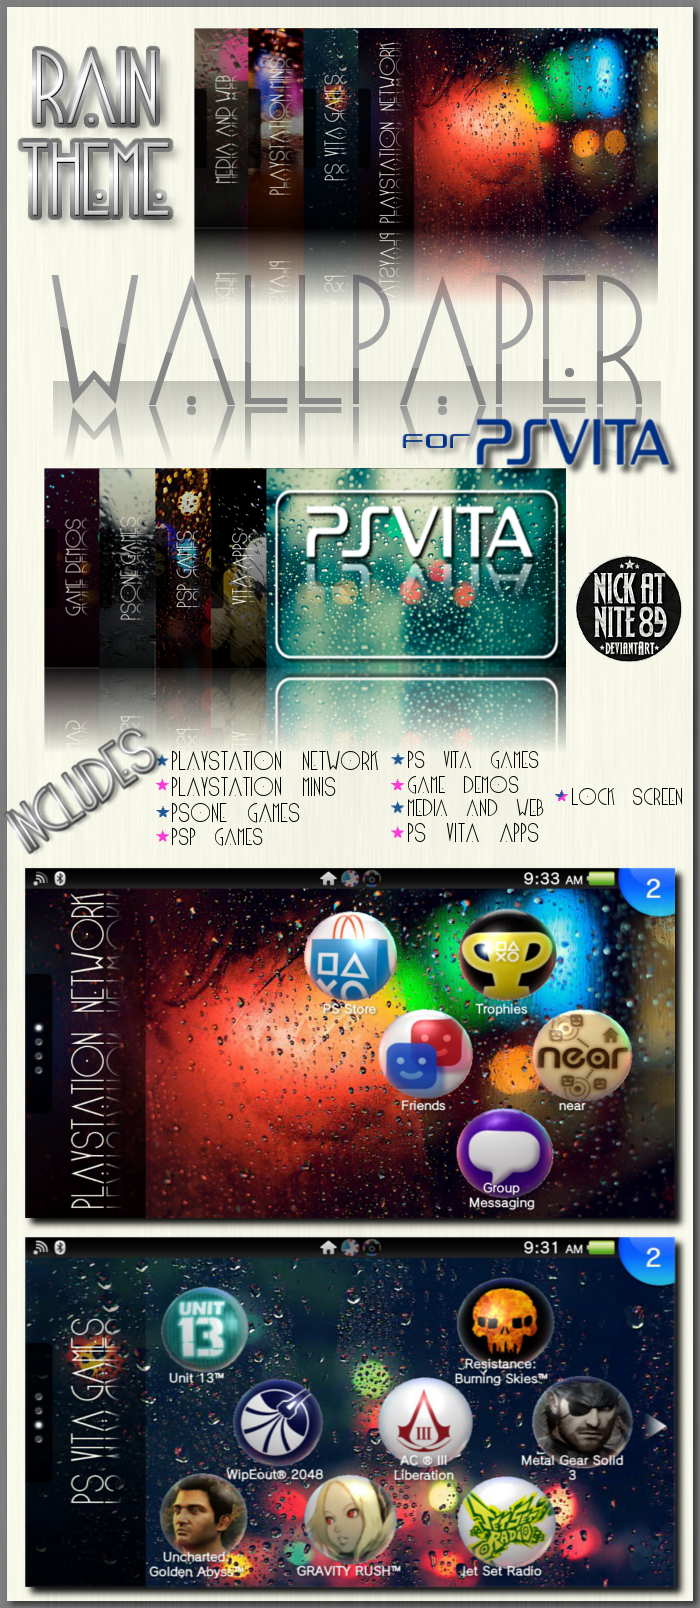 PS Vita Wallpaper Pack :Rain Theme: by NickatNite89 on DeviantArt